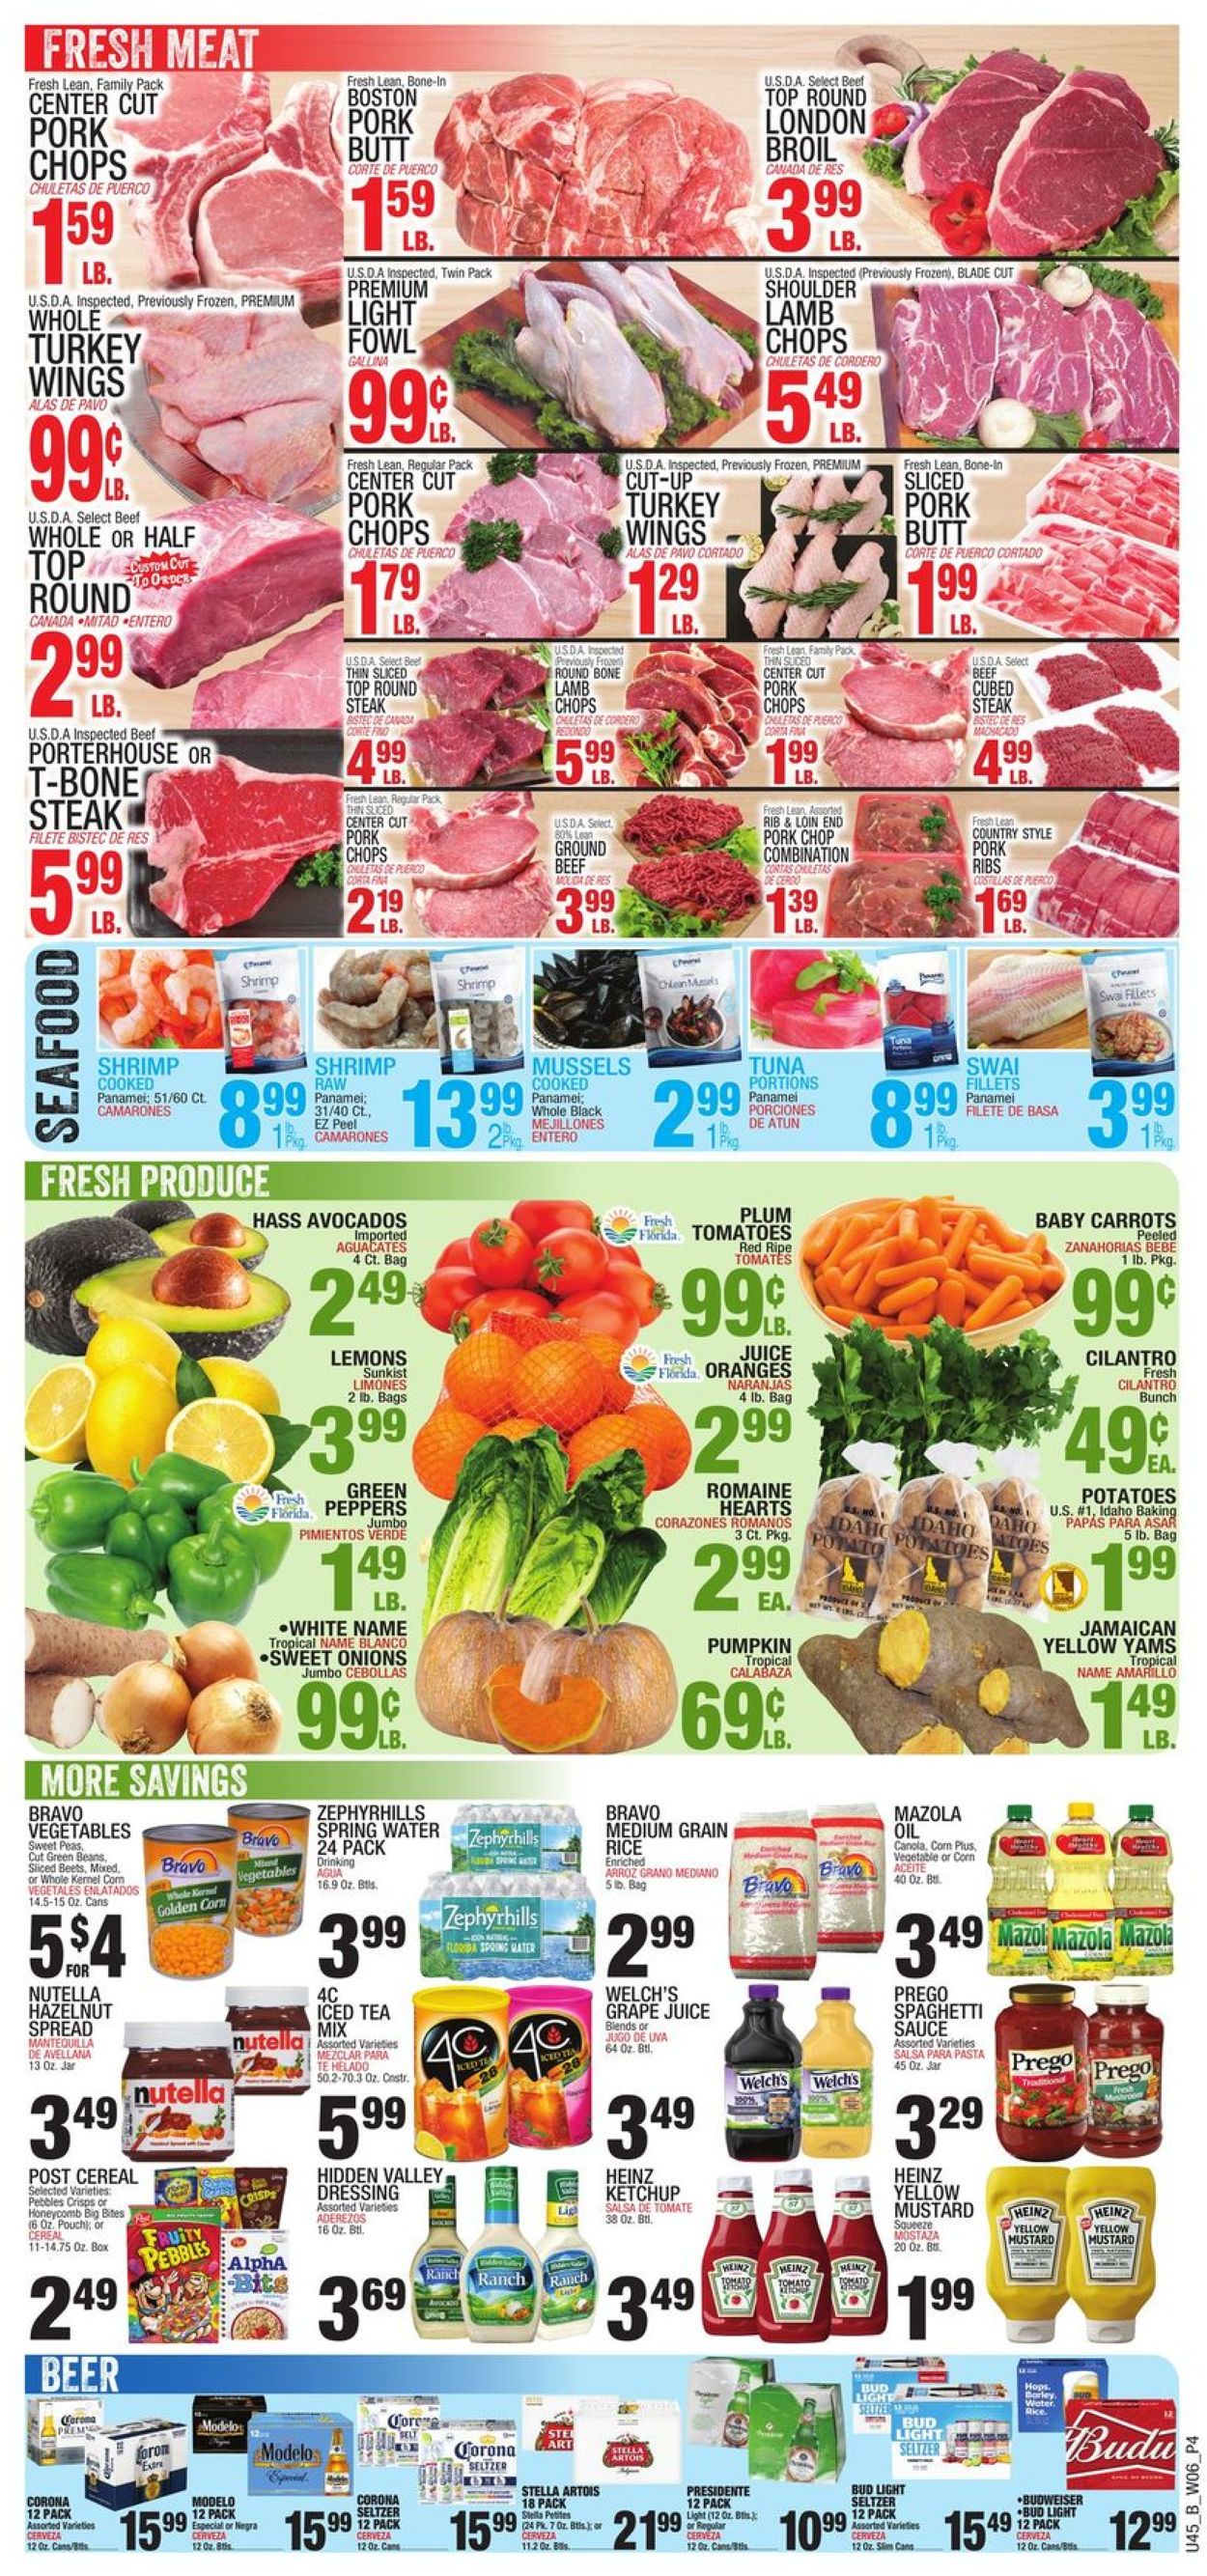 Catalogue Bravo Supermarkets from 02/04/2021